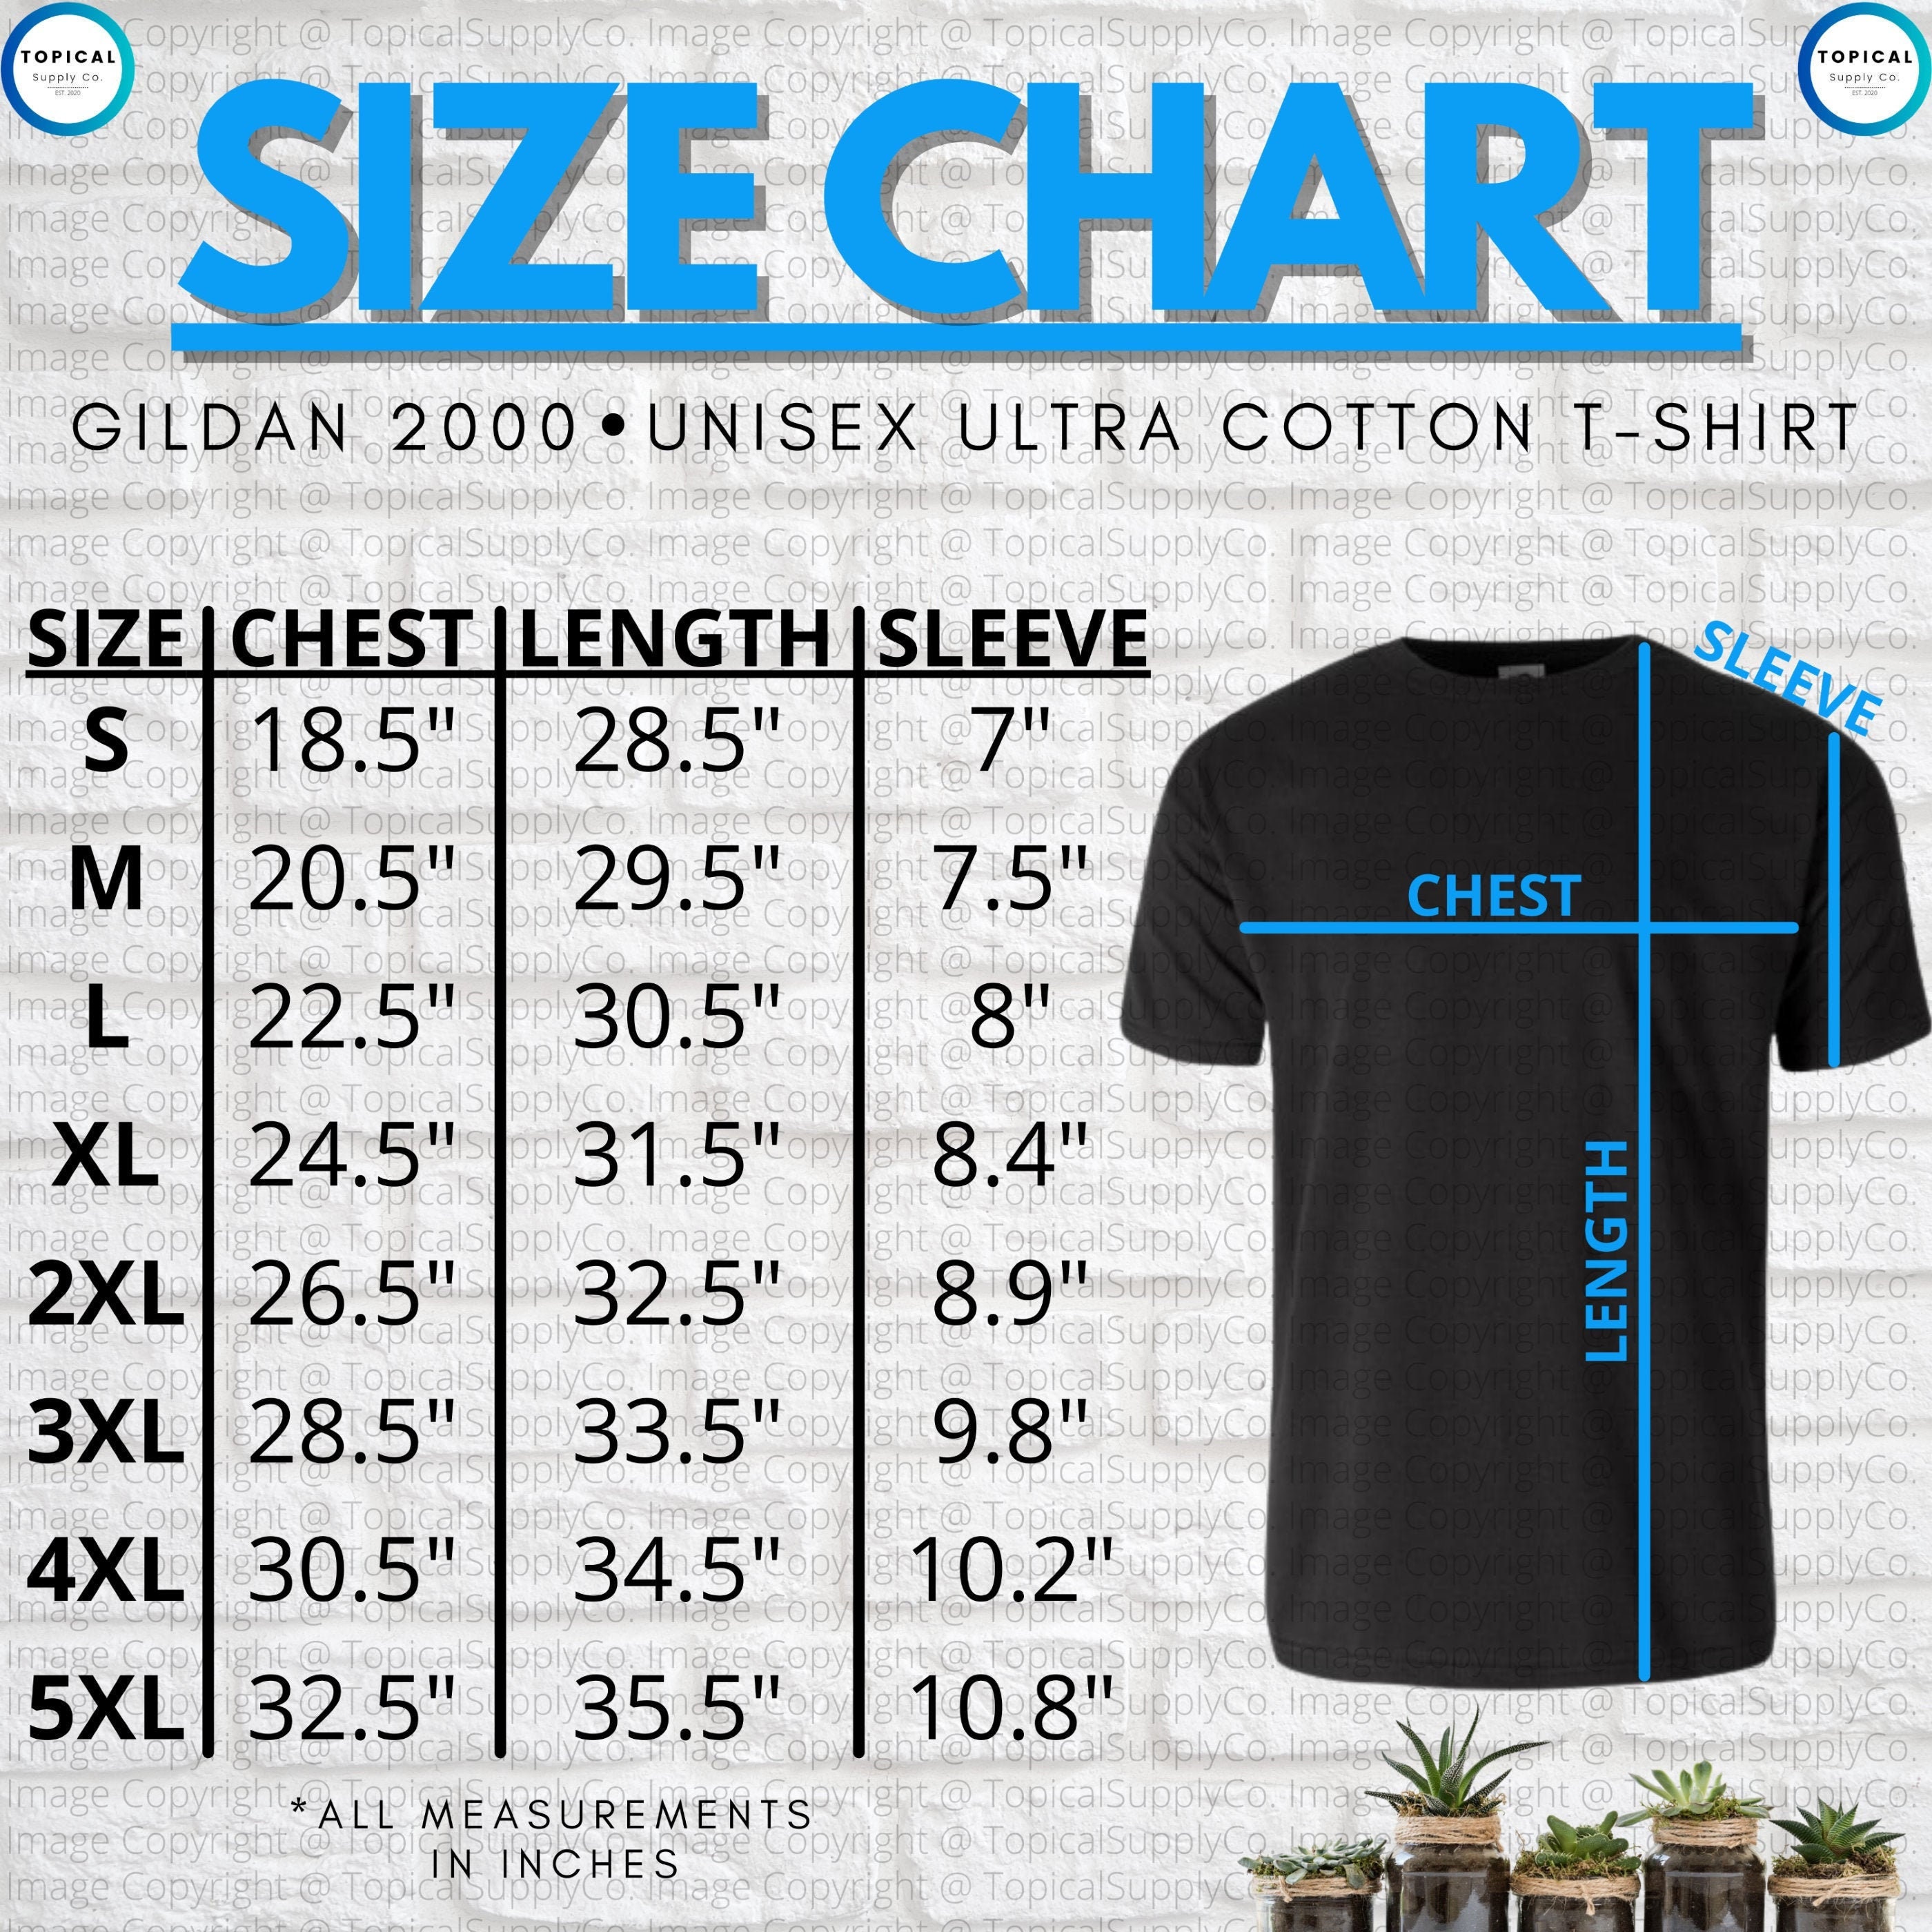 HQ Gildan 2000 Size Chart Gildan 2000 Unisex Ultra Cotton | Etsy